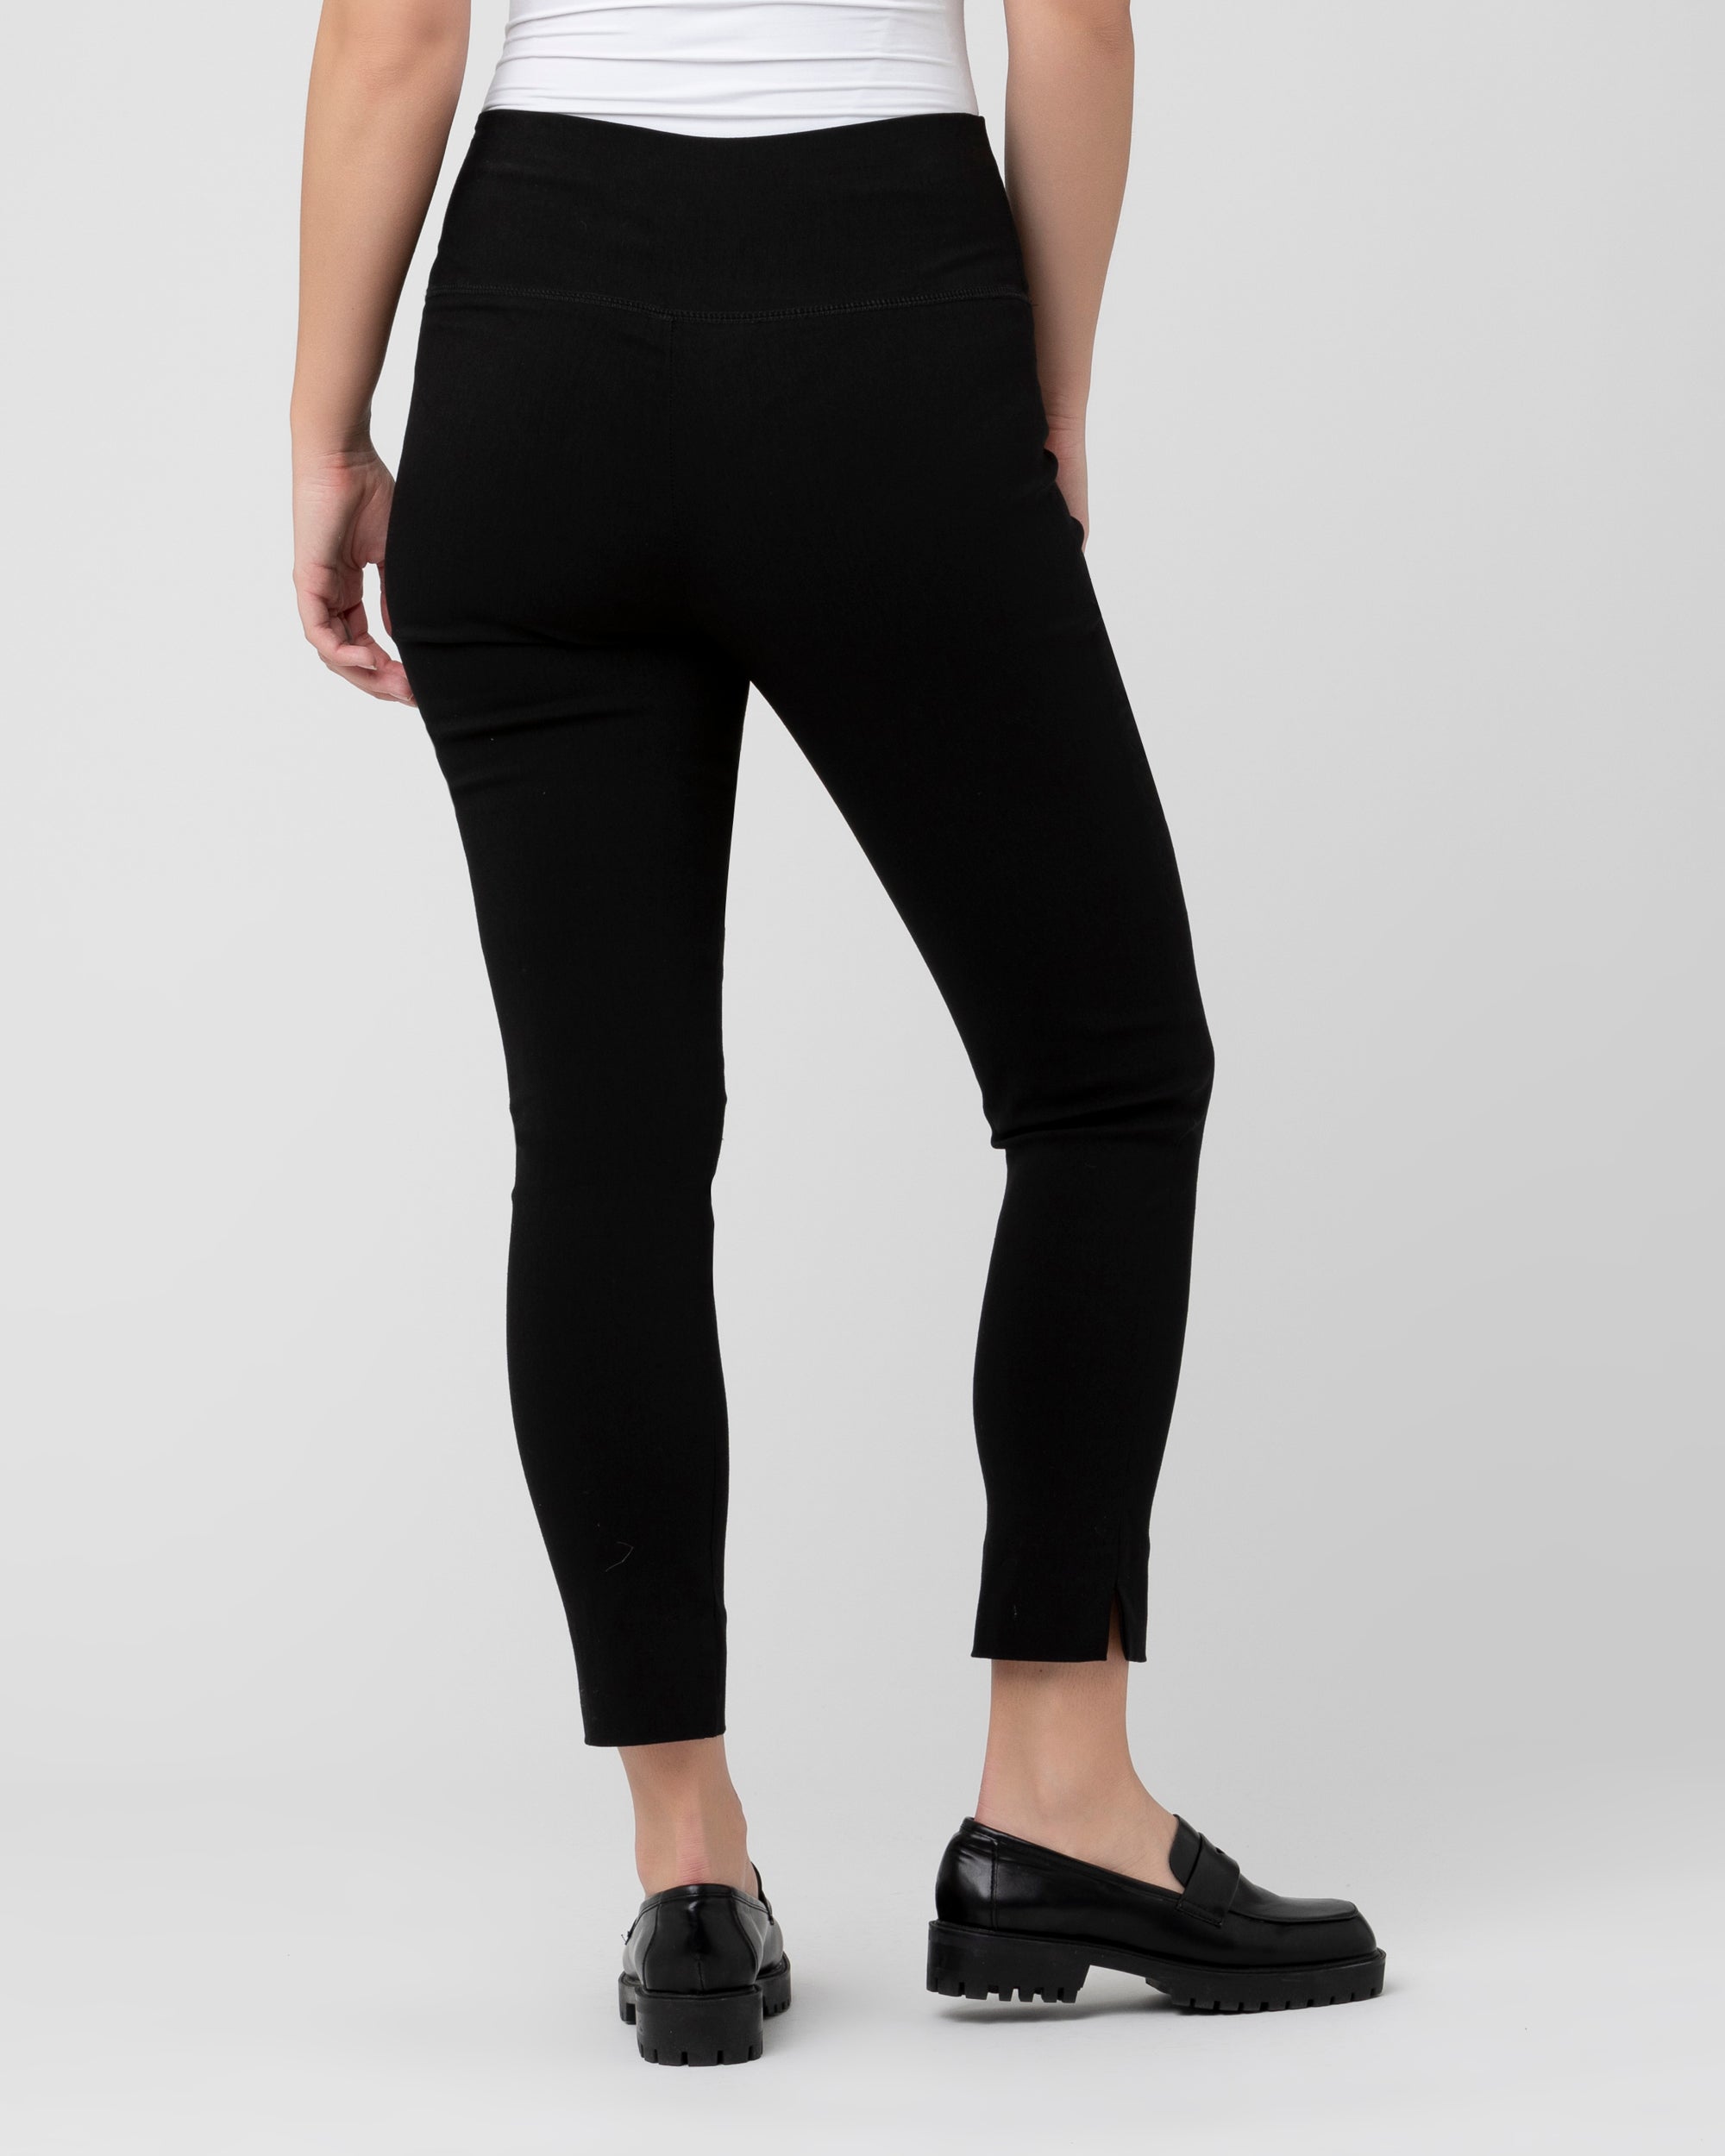 Katies - Womens Pants - Black - Classic Crop Pant - Cropped - Capri - Calf  Length - Slim Fit - Lightweight - Stretch Fabric - Summer Clothing Viscose  - Size 12 UK, £14.97